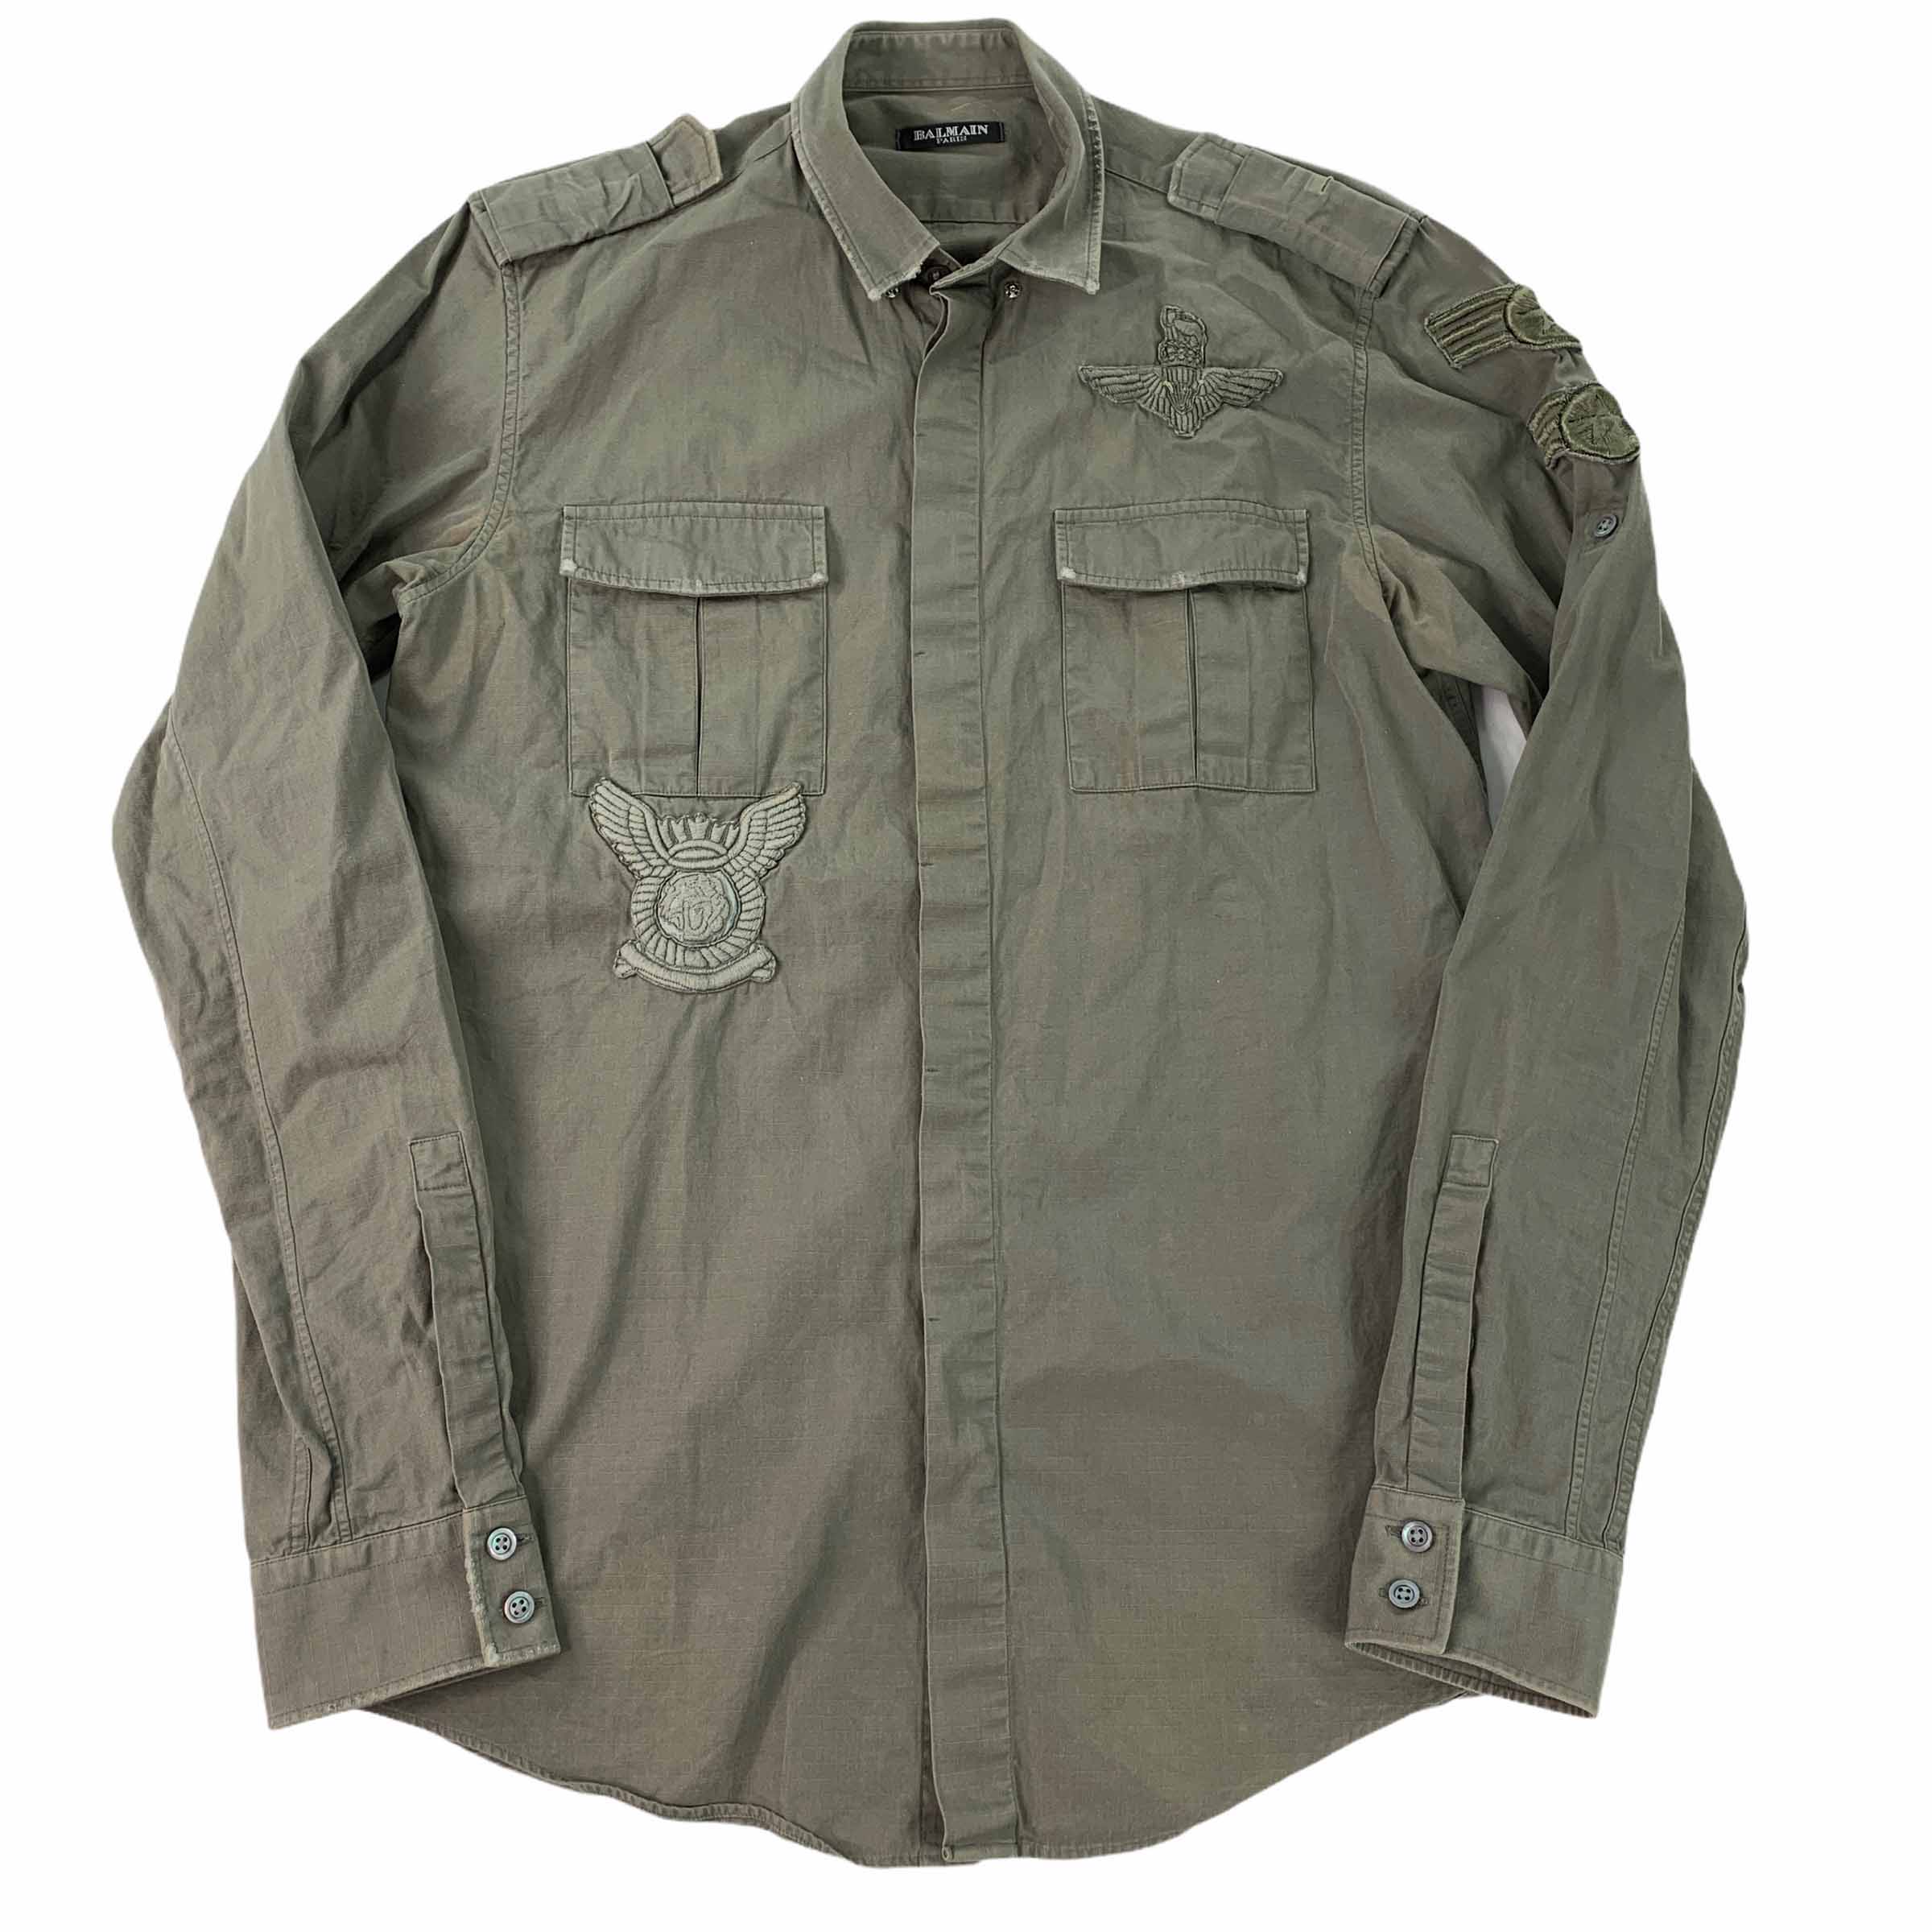 [Balmain] Military Patch Shirt KH - Size 15 1/2